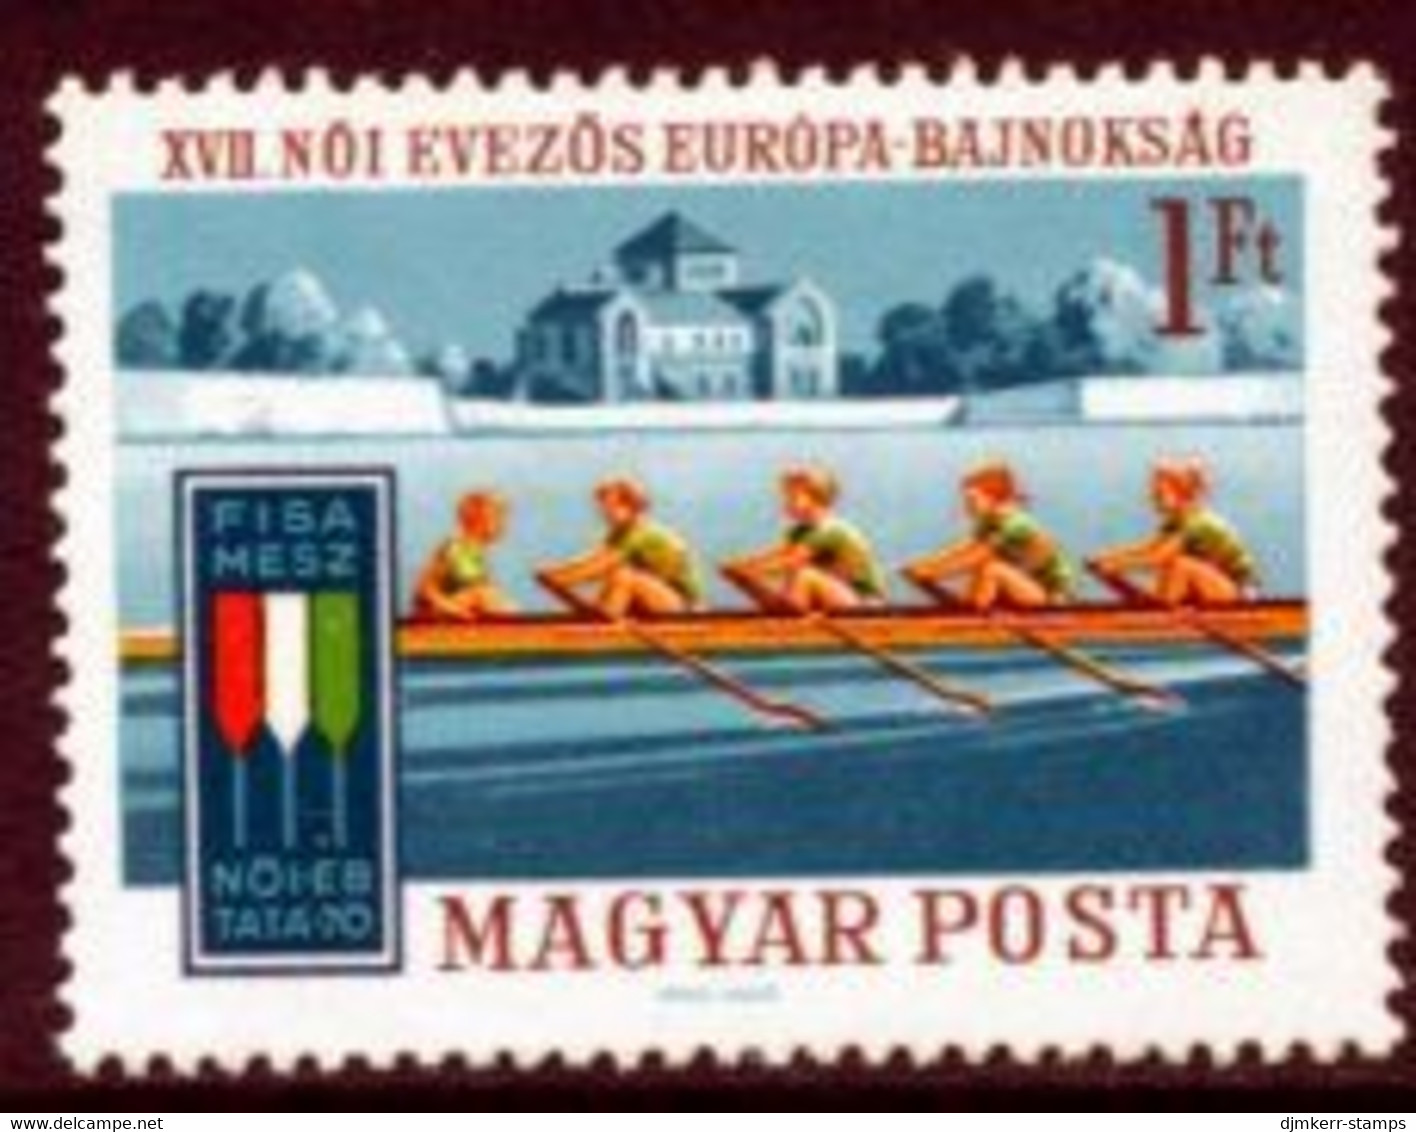 HUNGARY 1970  Women's Rowing Championship MNH / **.  Michel 2601 - Nuevos